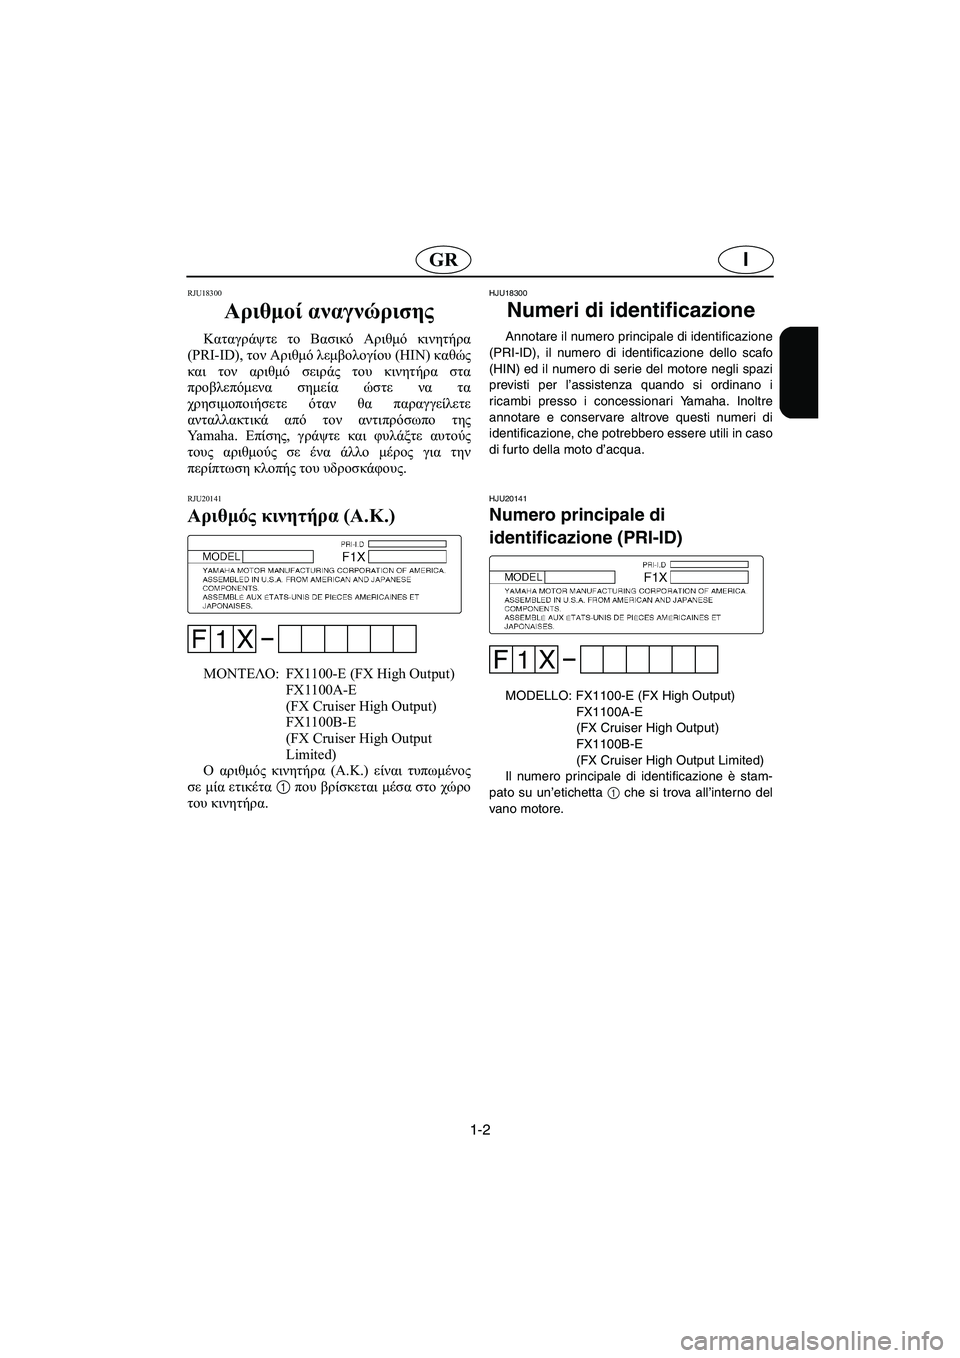 YAMAHA FX HO 2006  Manual de utilização (in Portuguese) 1-2
IGR
RJU18300 
Αριθμοί αναγνώρισης  
Καταγράψτε το Βασικό Αριθμό κινητήρα
(PRI-ID), τον Αριθμό λεμβολογίου (HIN) καθώς
κ�